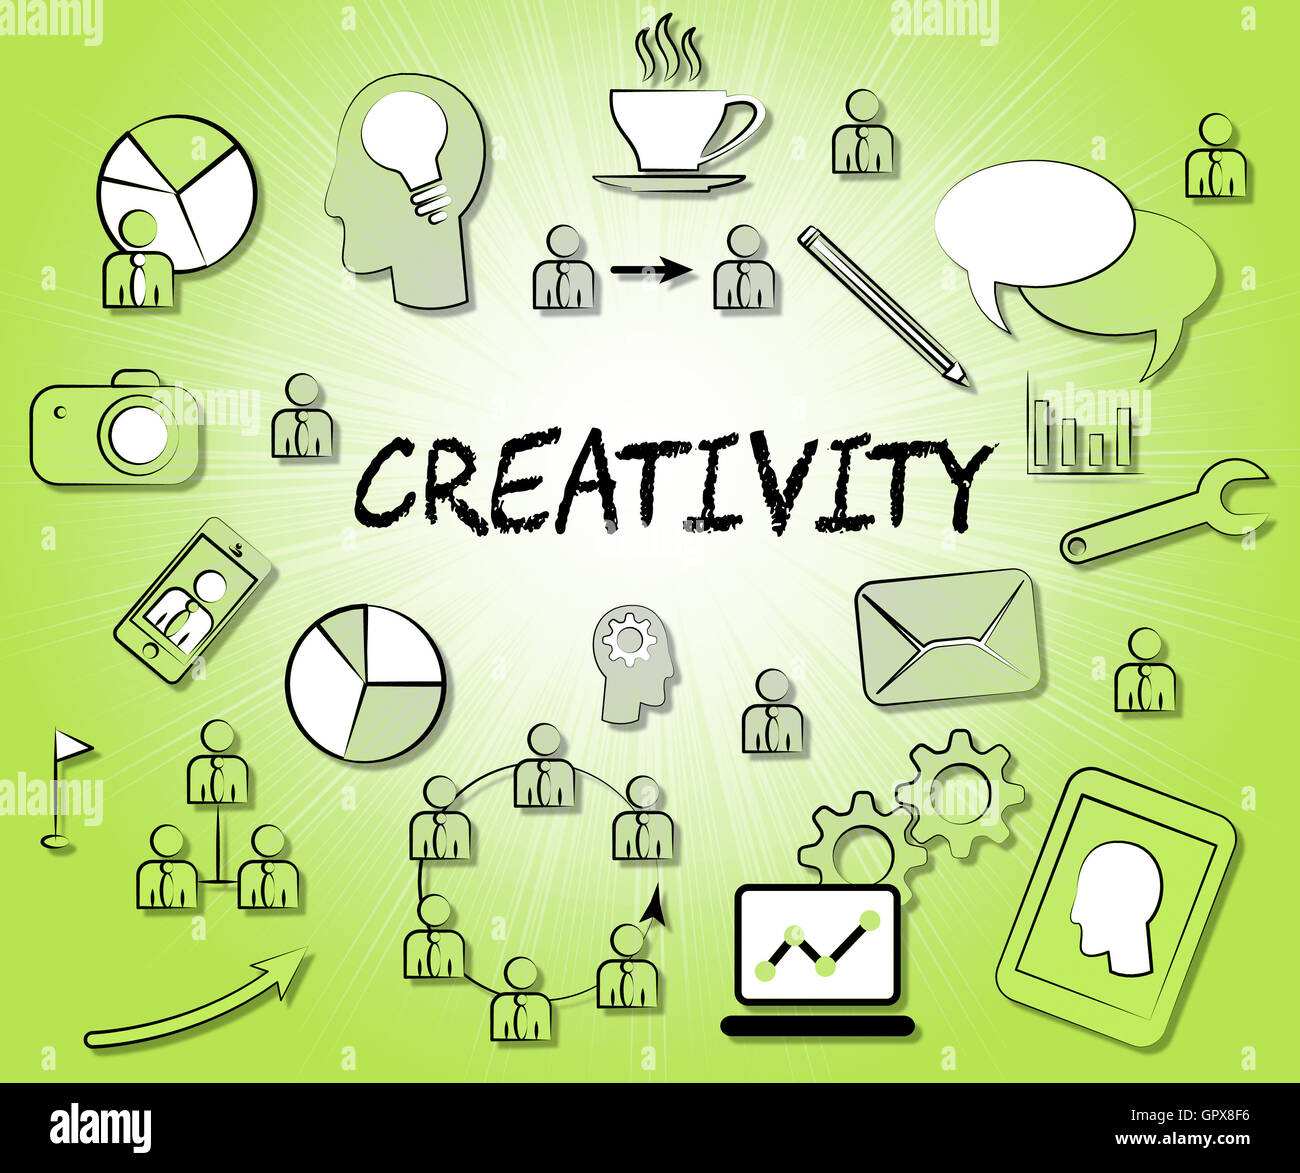 Creativity Icons Indicating Imaginative Idea And Inspired Stock Photo